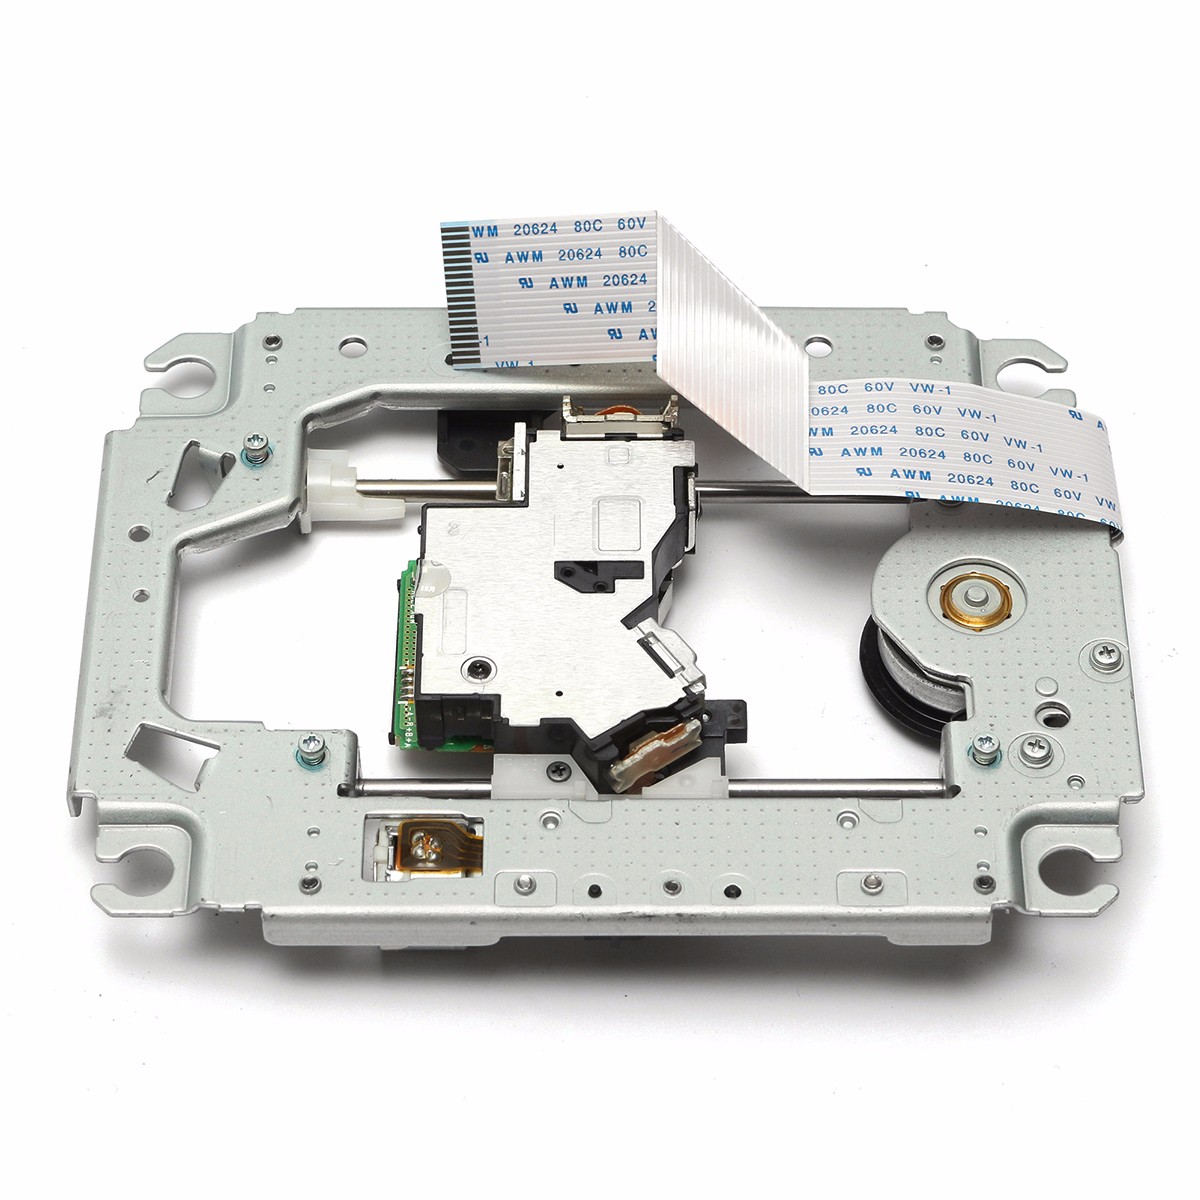 KES-410ACA/410A KEM-410ACA Laser Lens & Deck for Play Station 3 for PS3 Parts 8